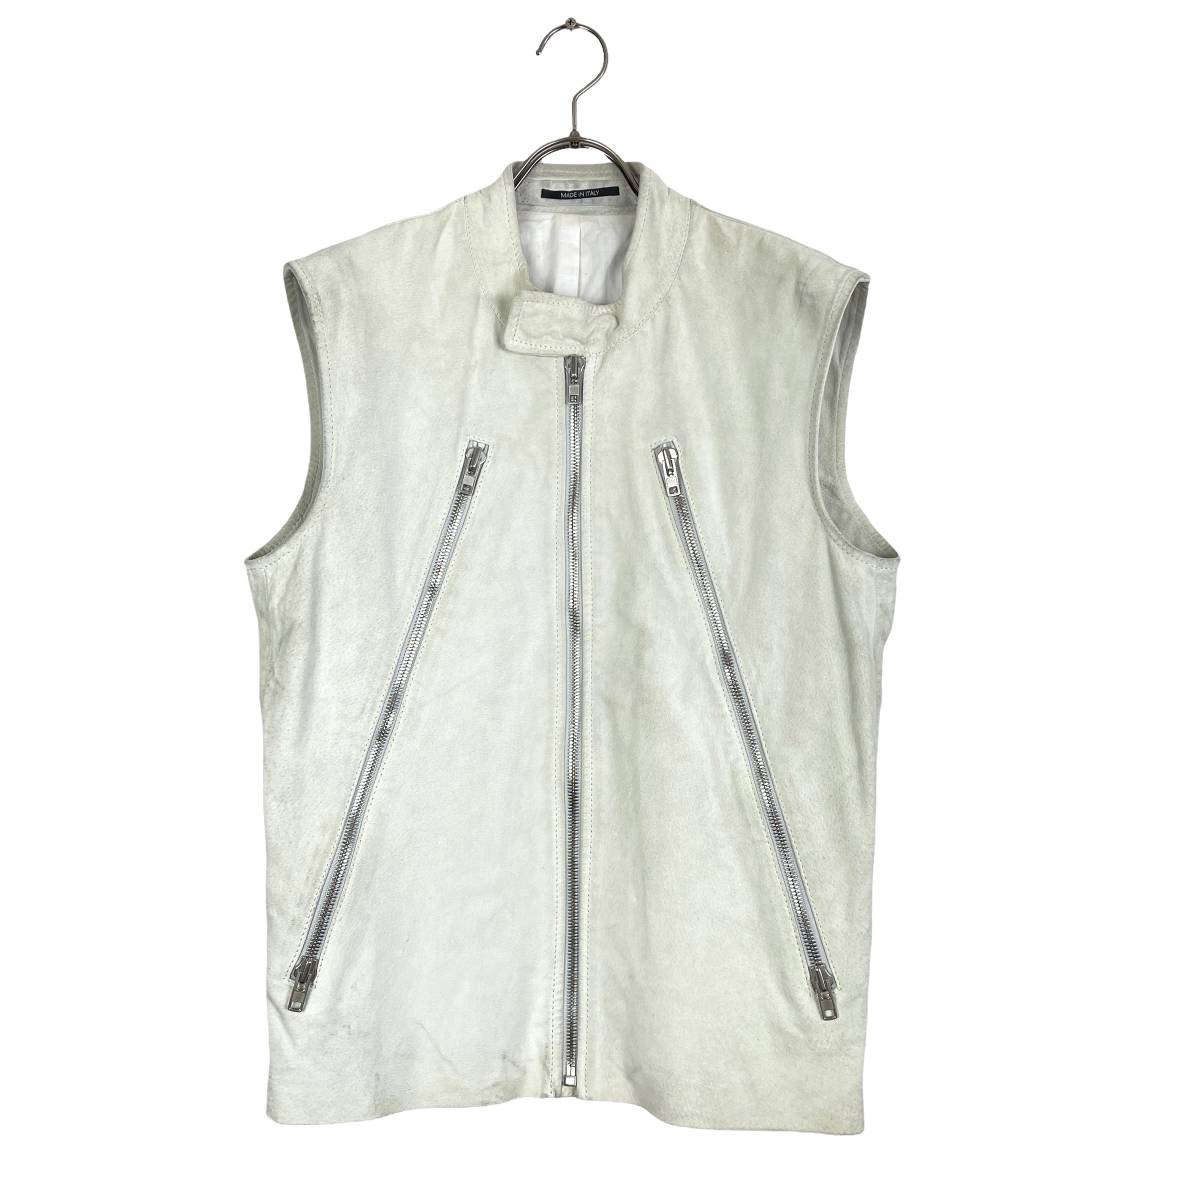 Maison Margiela(メゾン マルジェラ) pig leather vest (white)